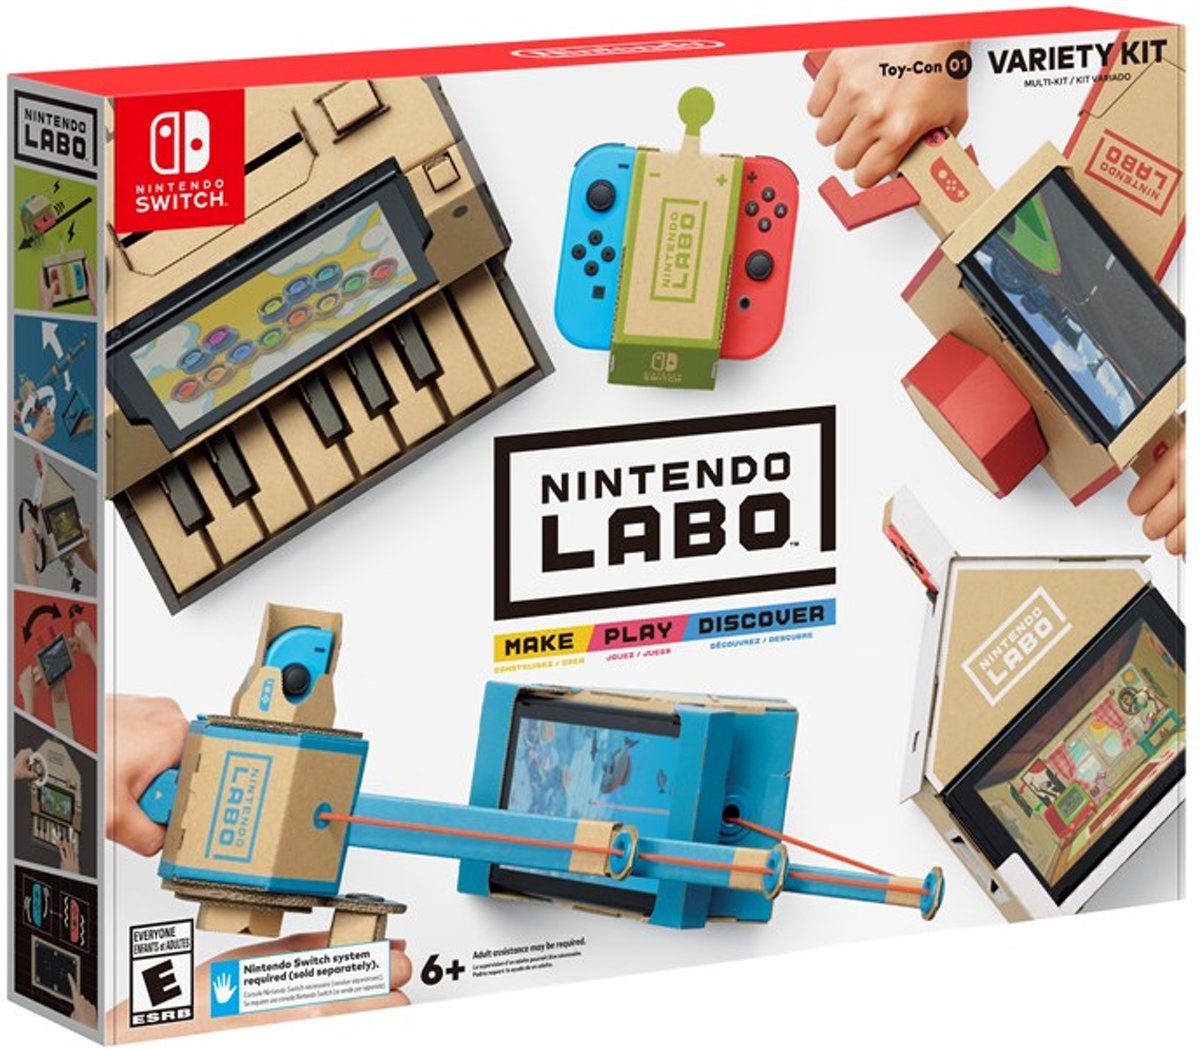 Nintendo Labo - Mixpakket (Toy-Con 01) (Switch), Nintendo